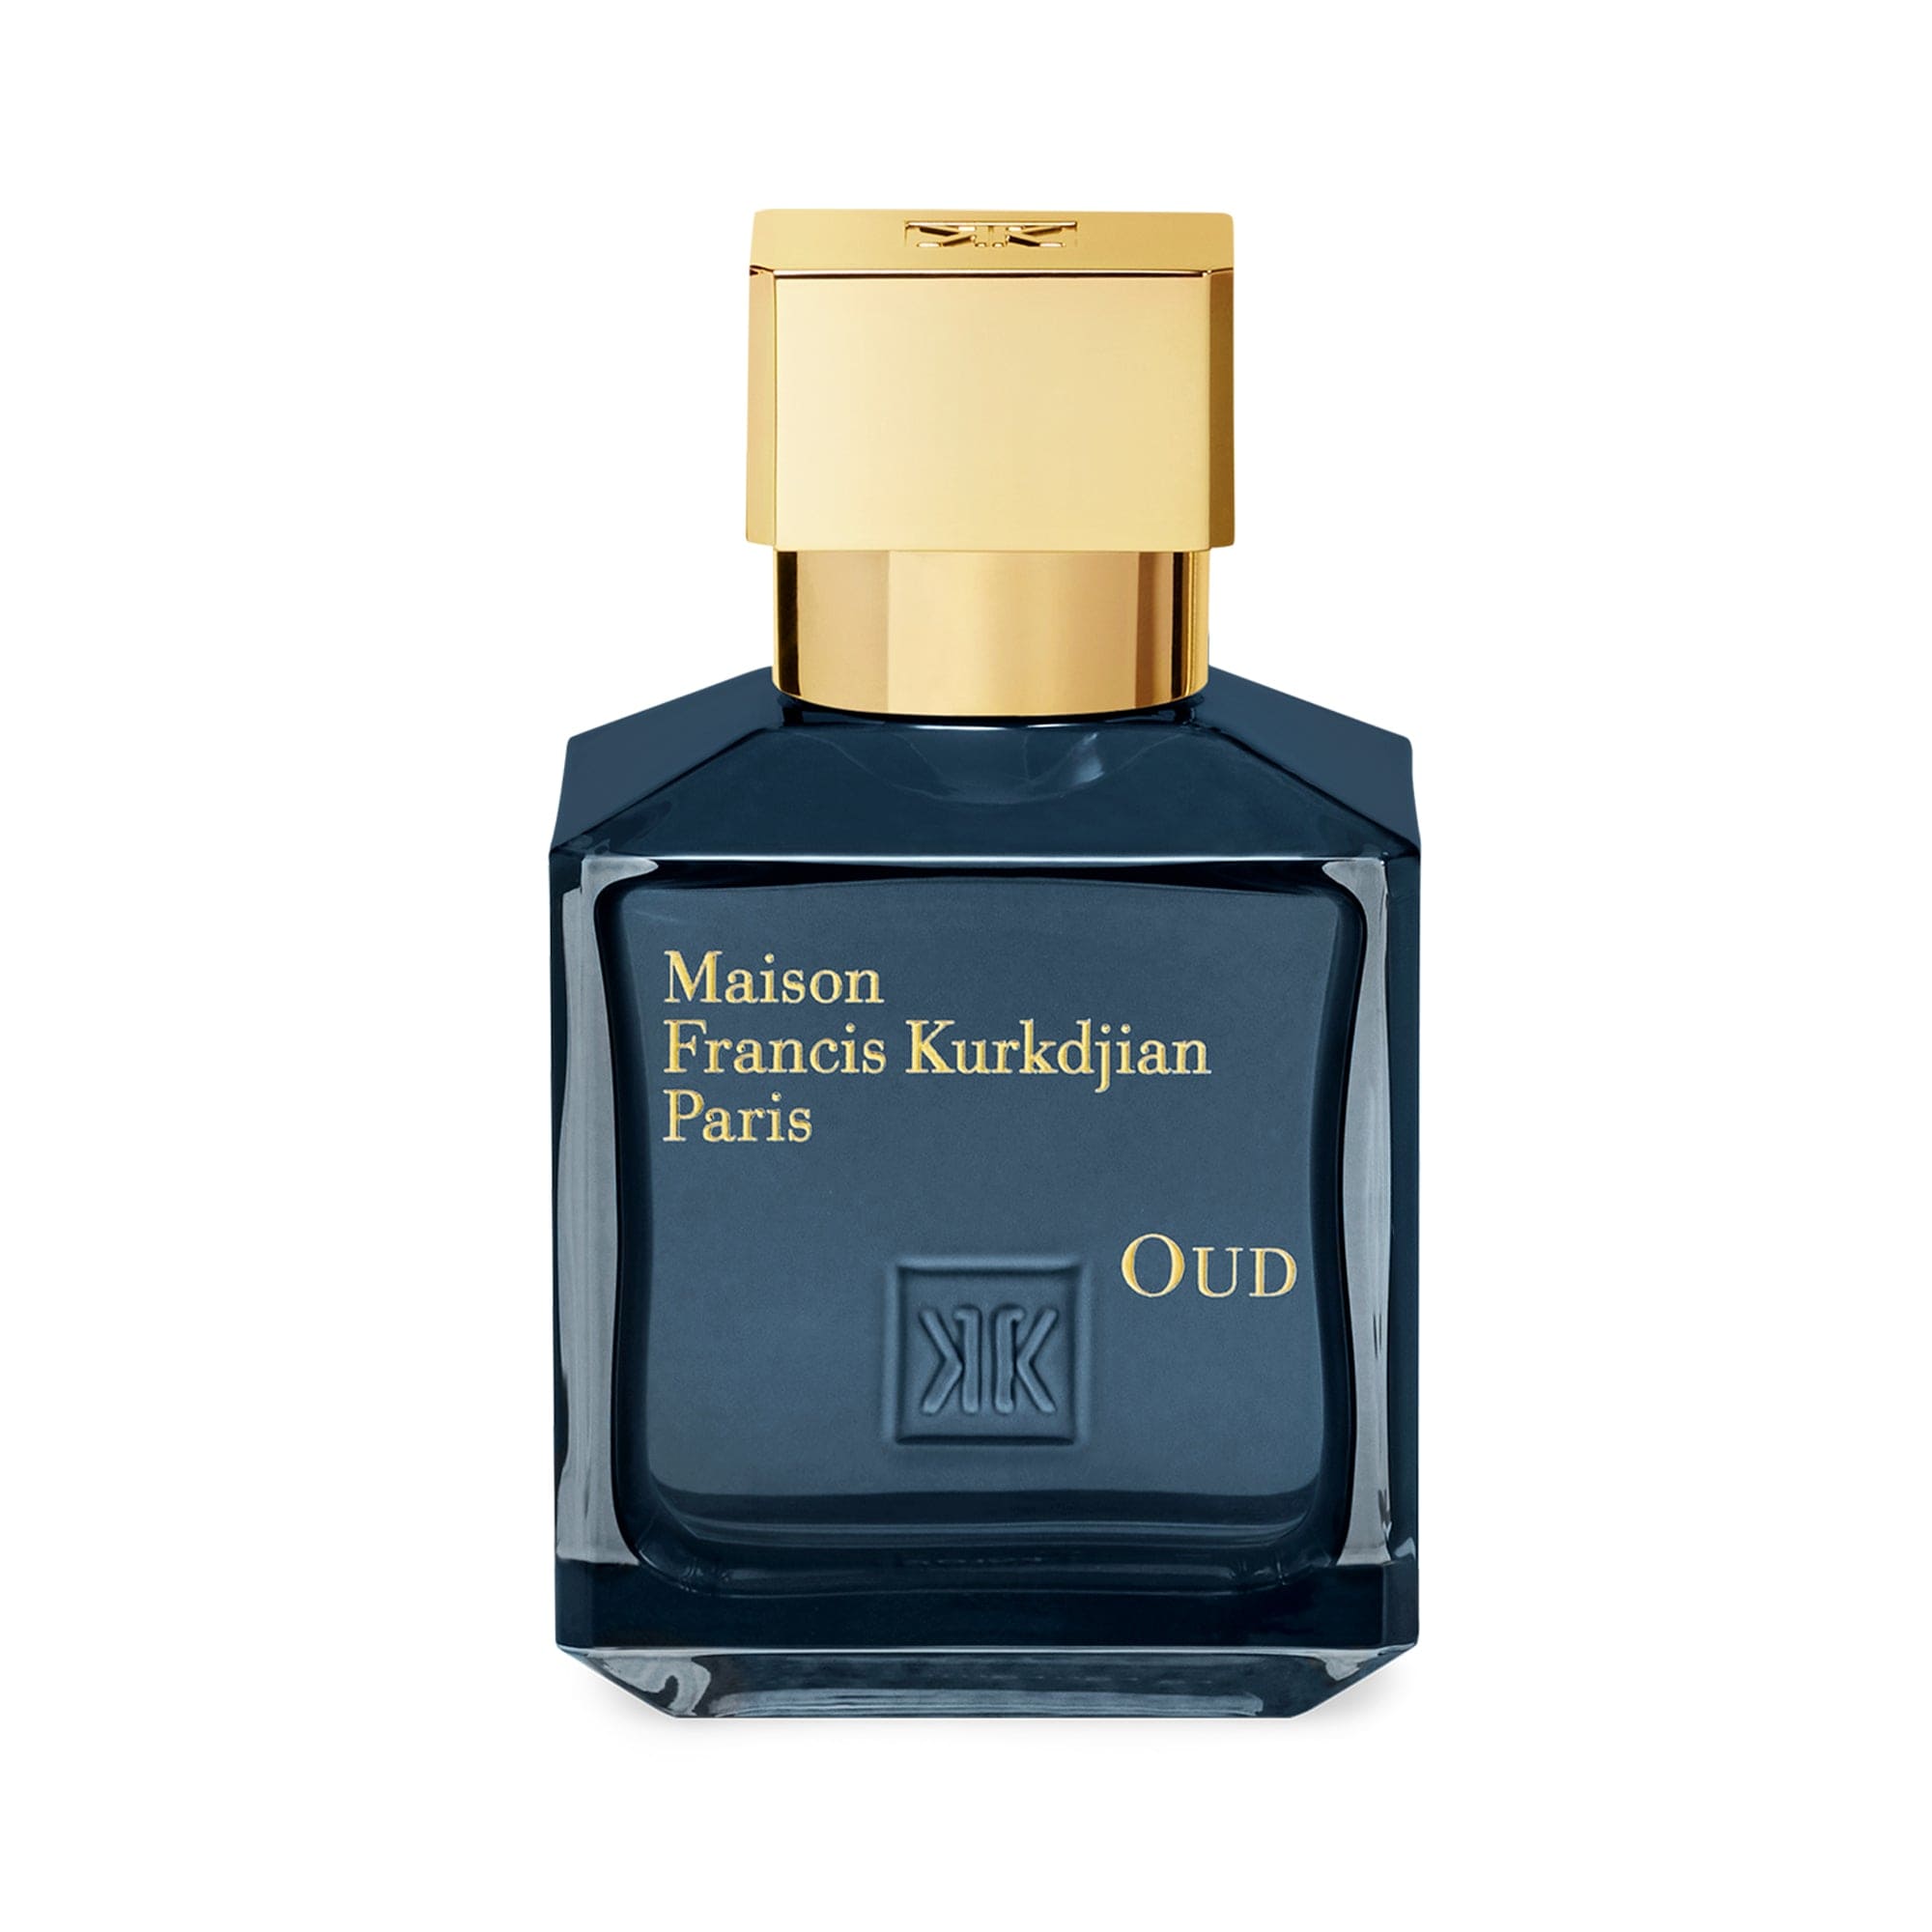 OUD de Maison Francis Kurkdjian Eau de Parfum